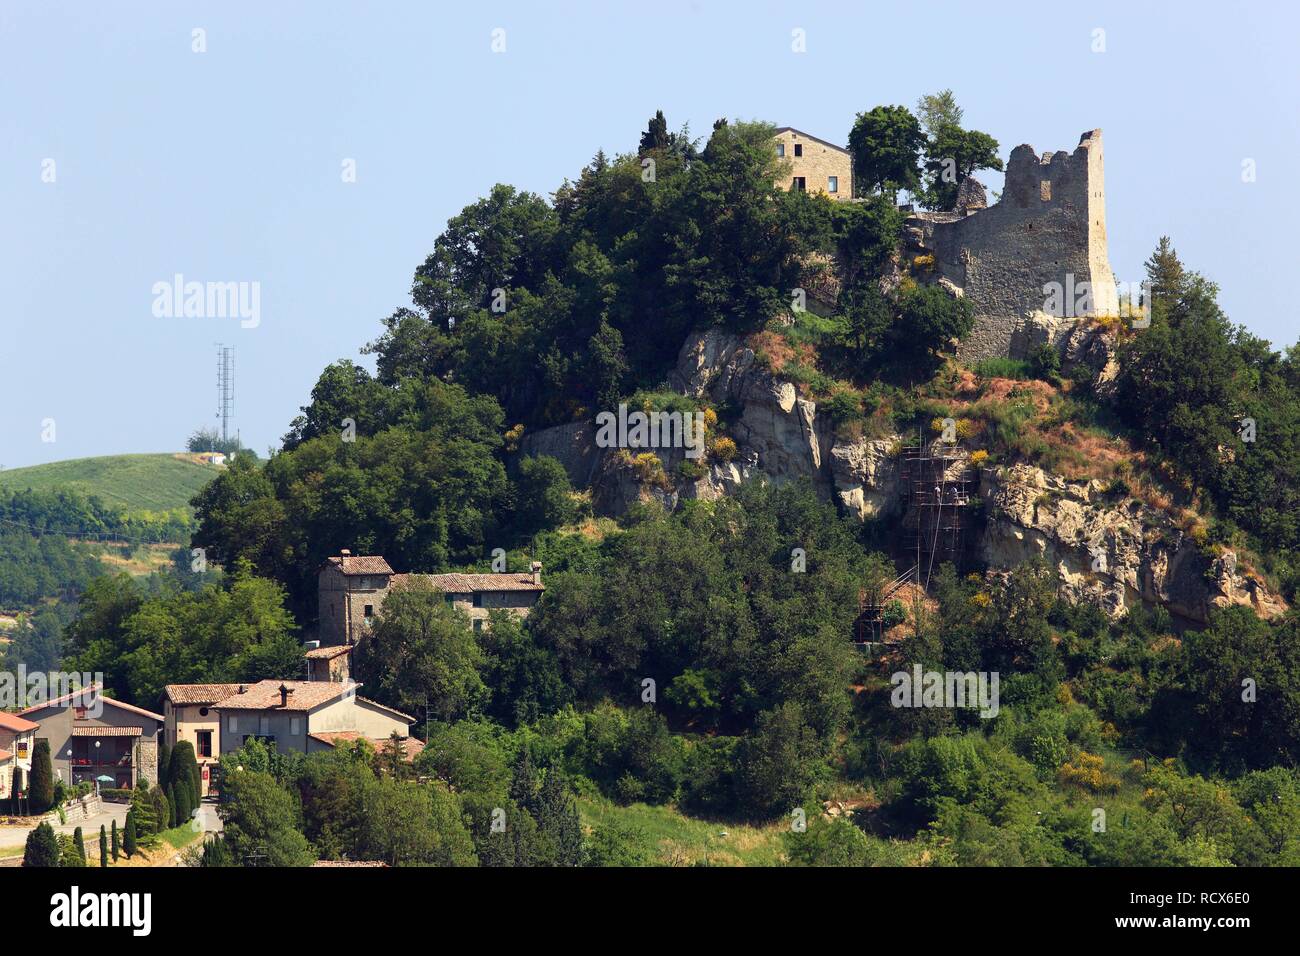 Ruins of Canossa Castle, Emilia Romagna, Italy, Europe Stock Photo - Alamy